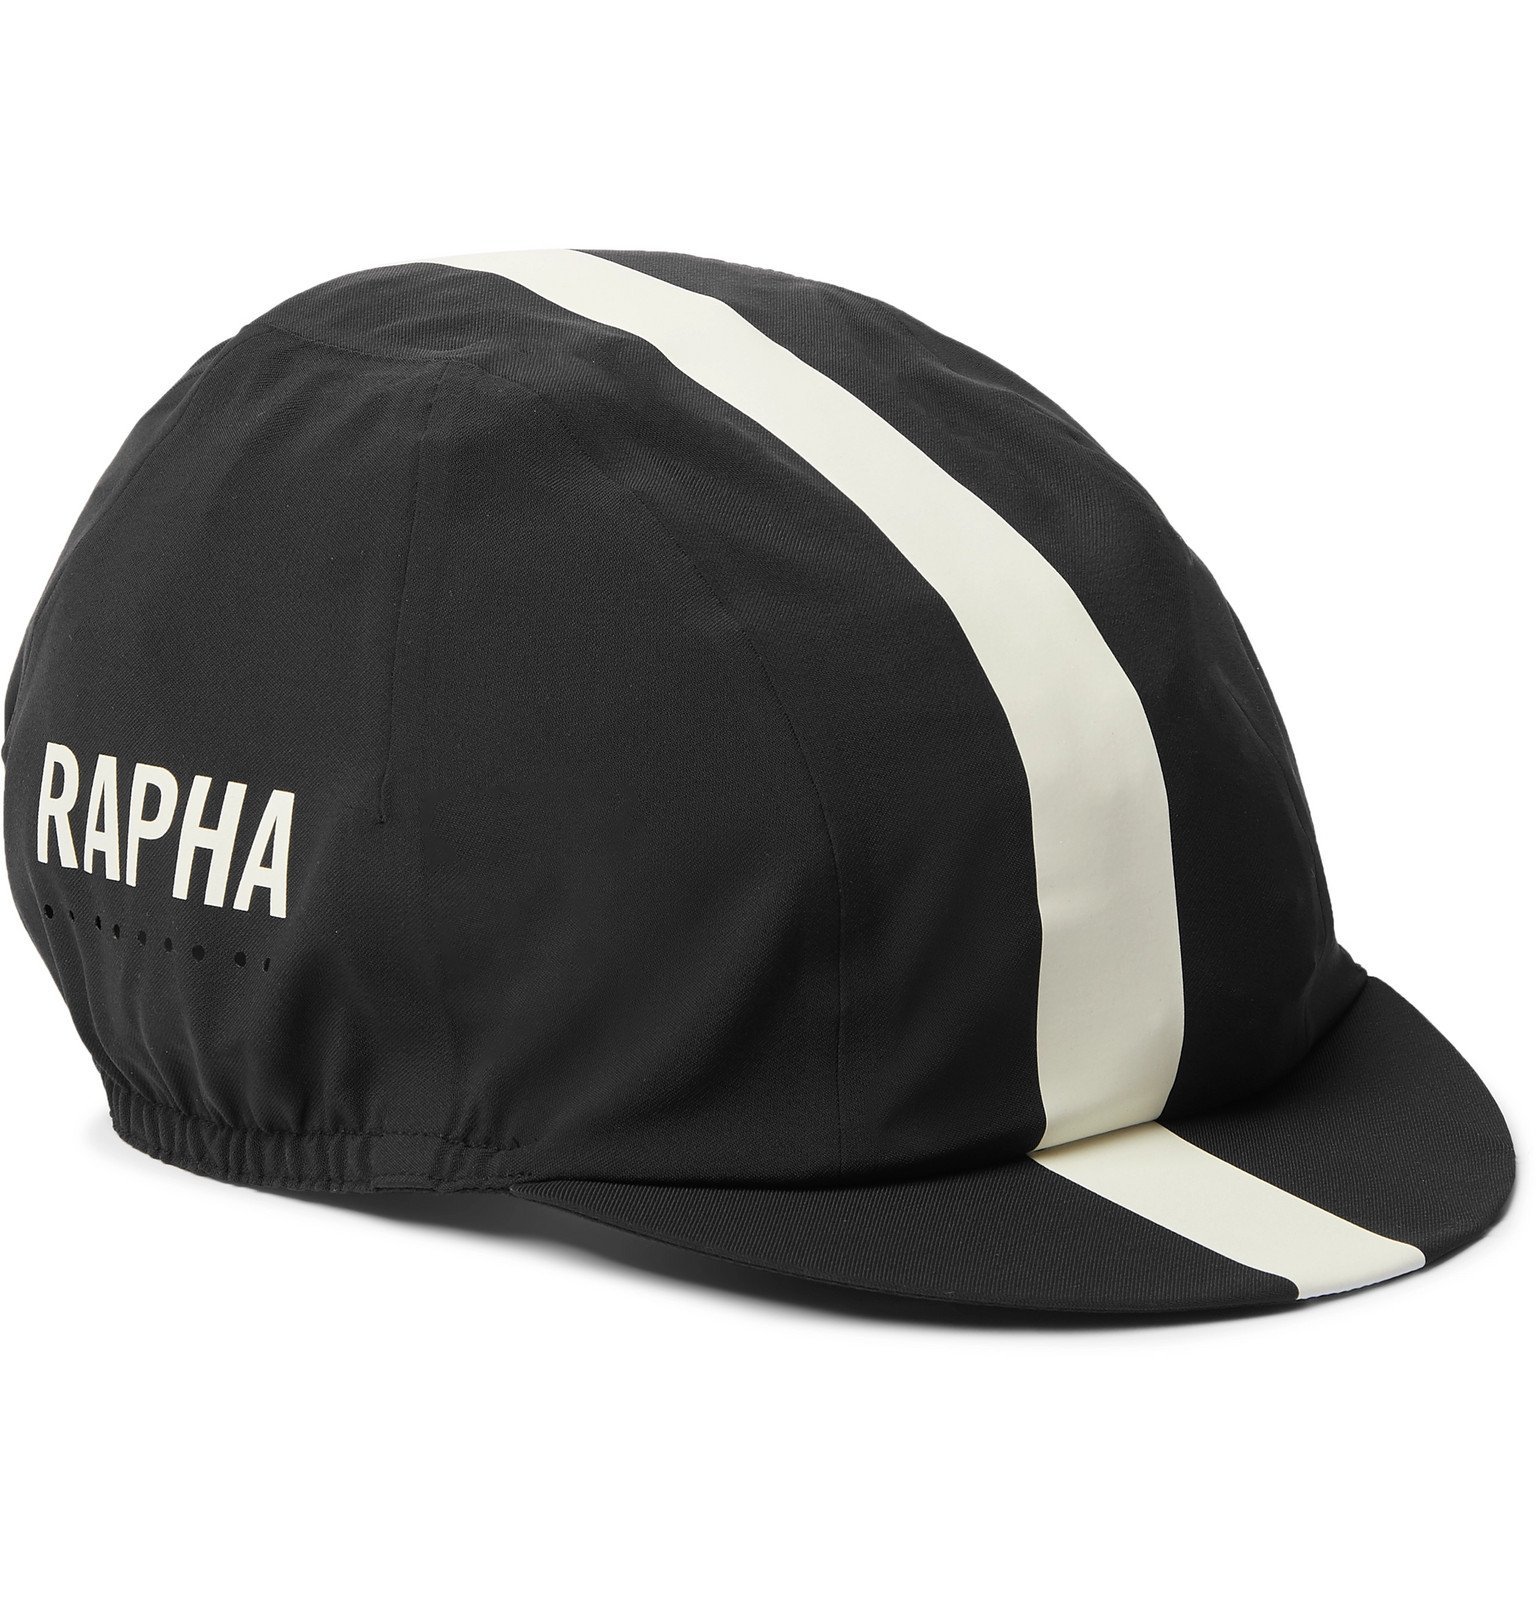 rapha cycling caps